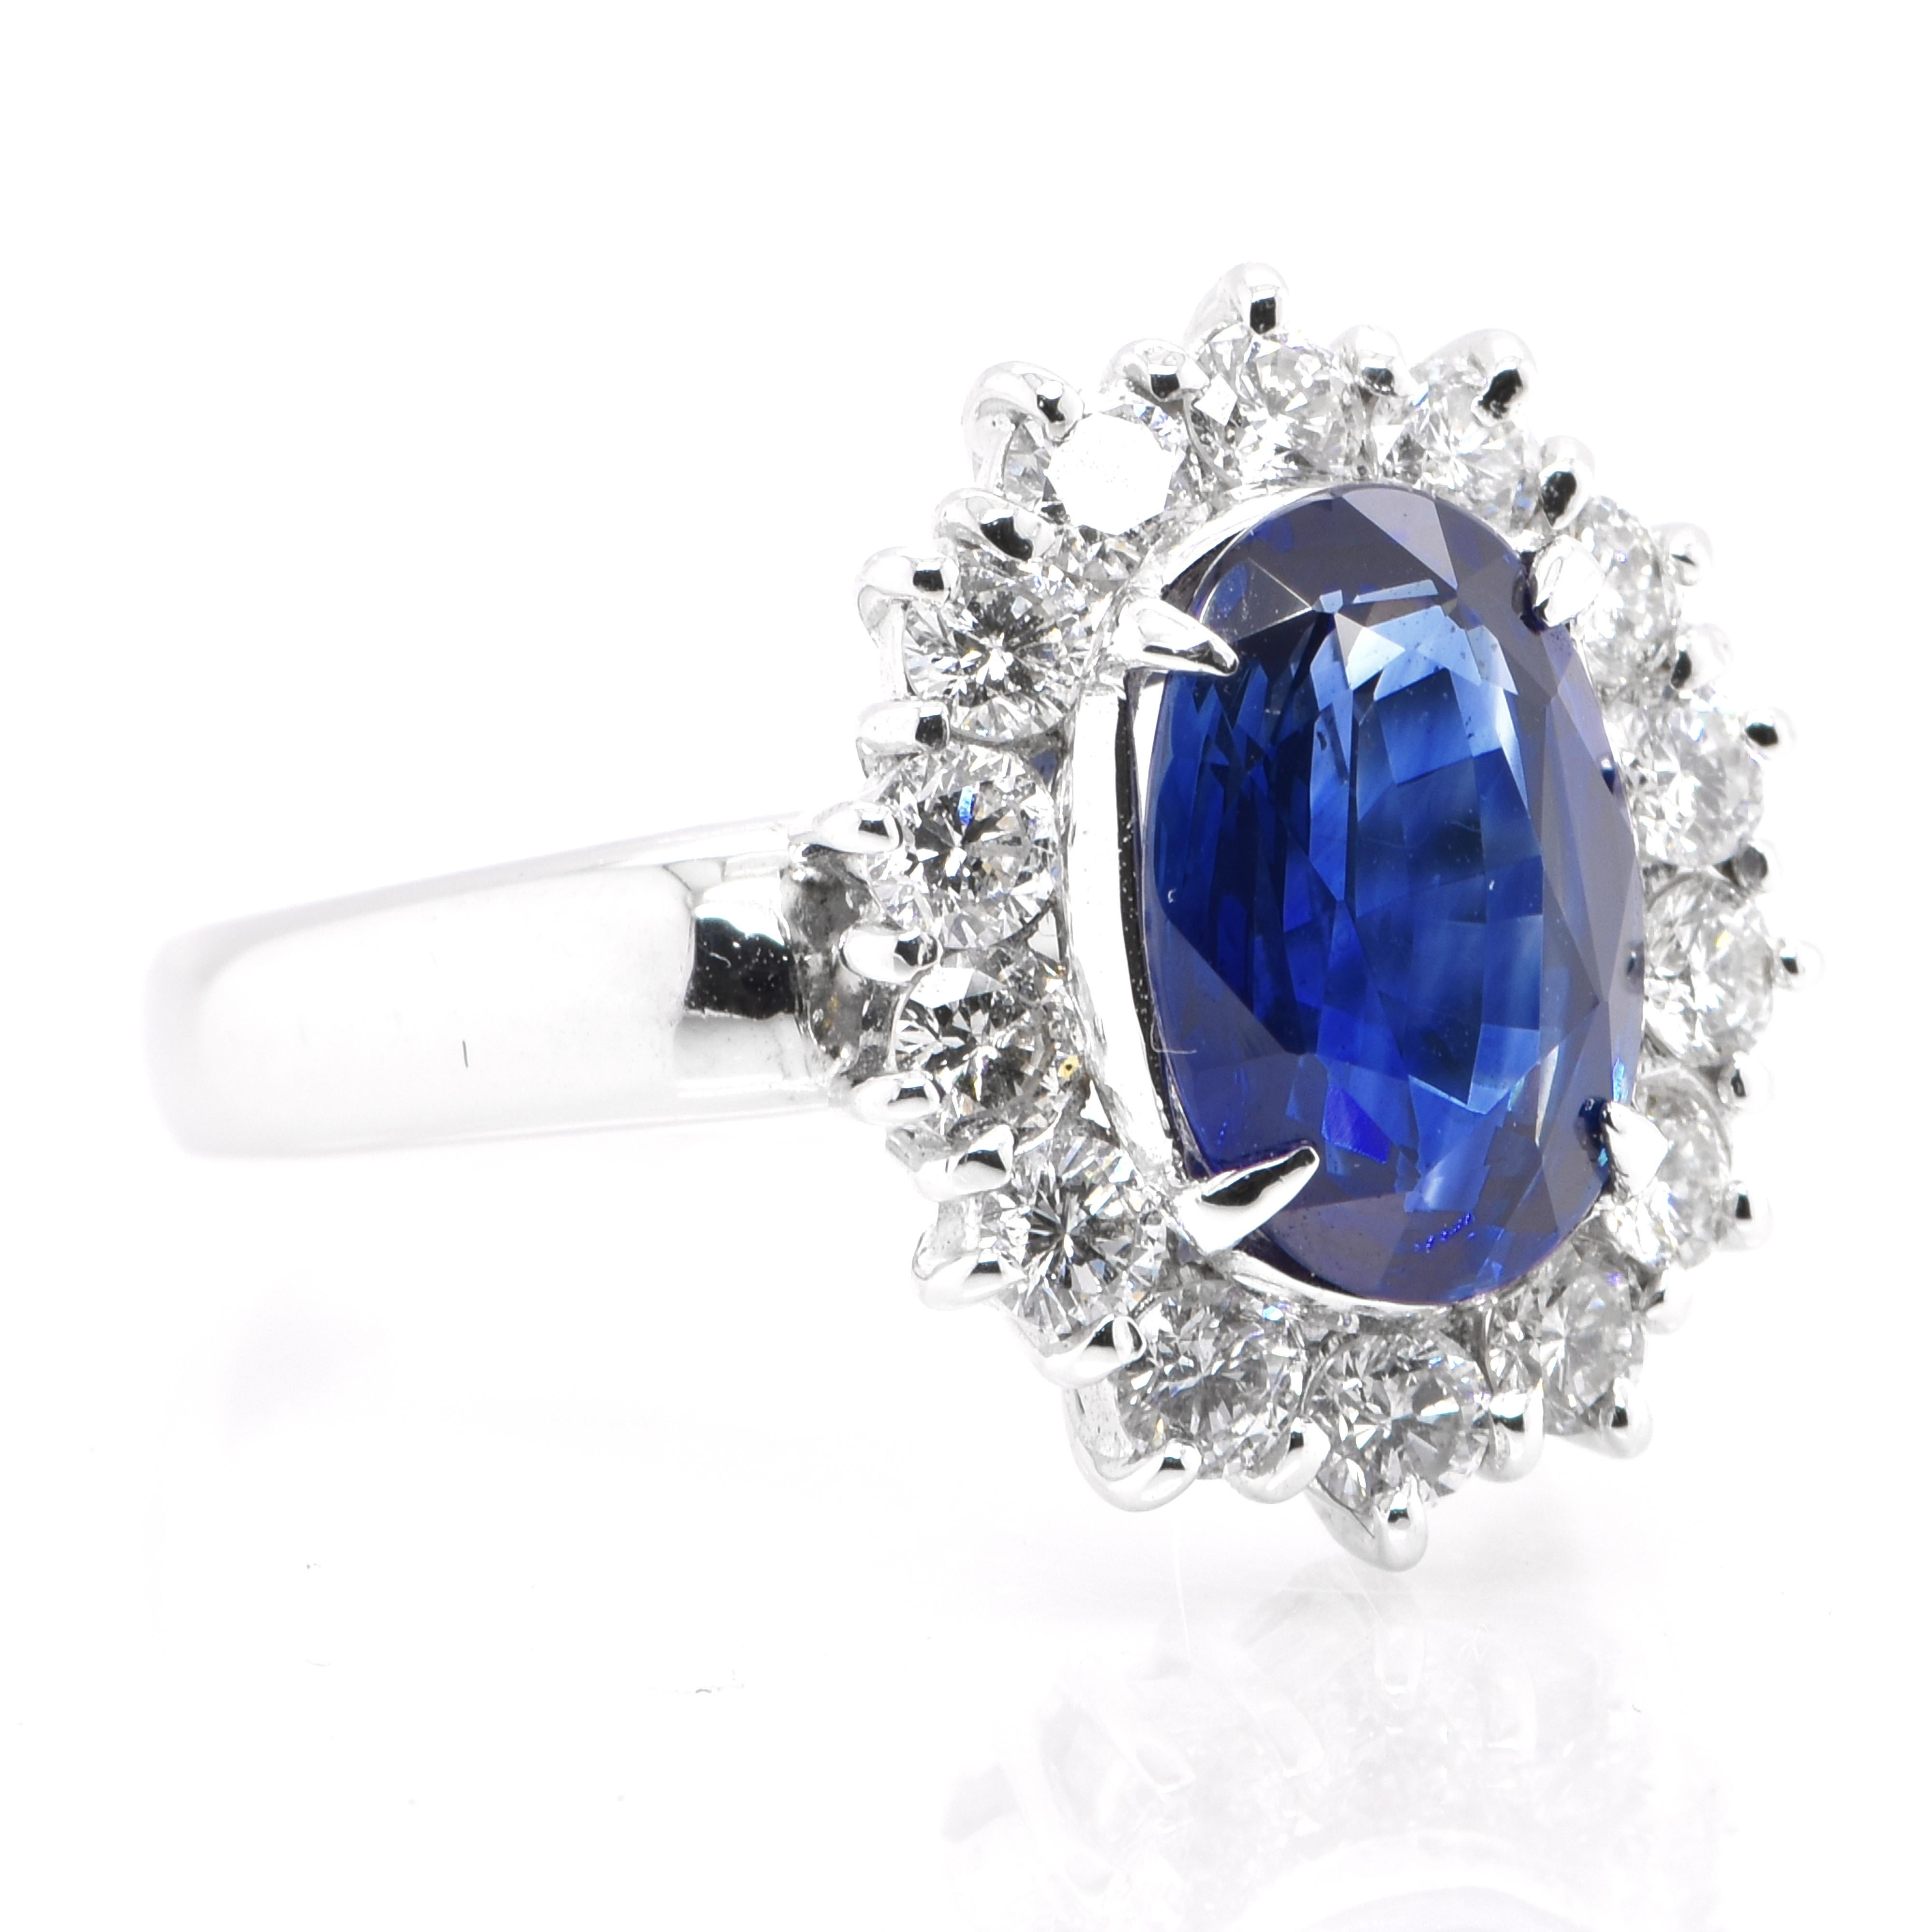 Modern AIG Certified 3.11 Carat Natural Unheated Blue Sapphire Ring Set in Platinum